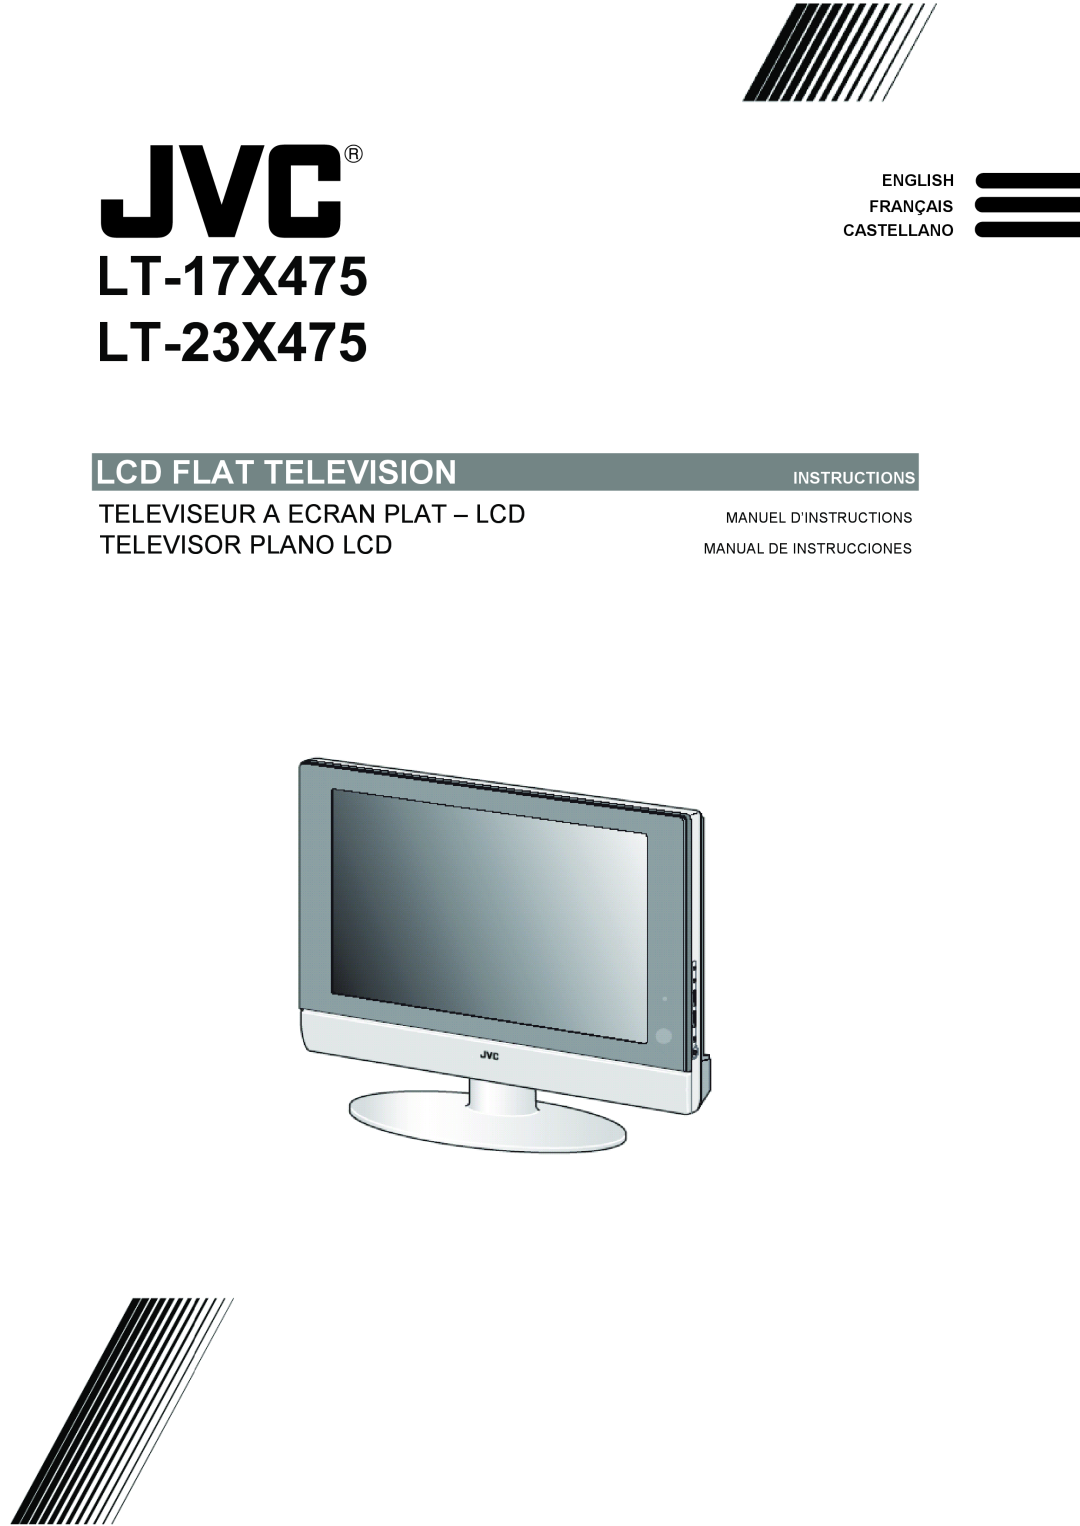 JVC manual Lcd Flat Television, LT-17X475 LT-23X475, Televiseur A Ecran Plat - Lcd Televisor Plano Lcd, Instructions 